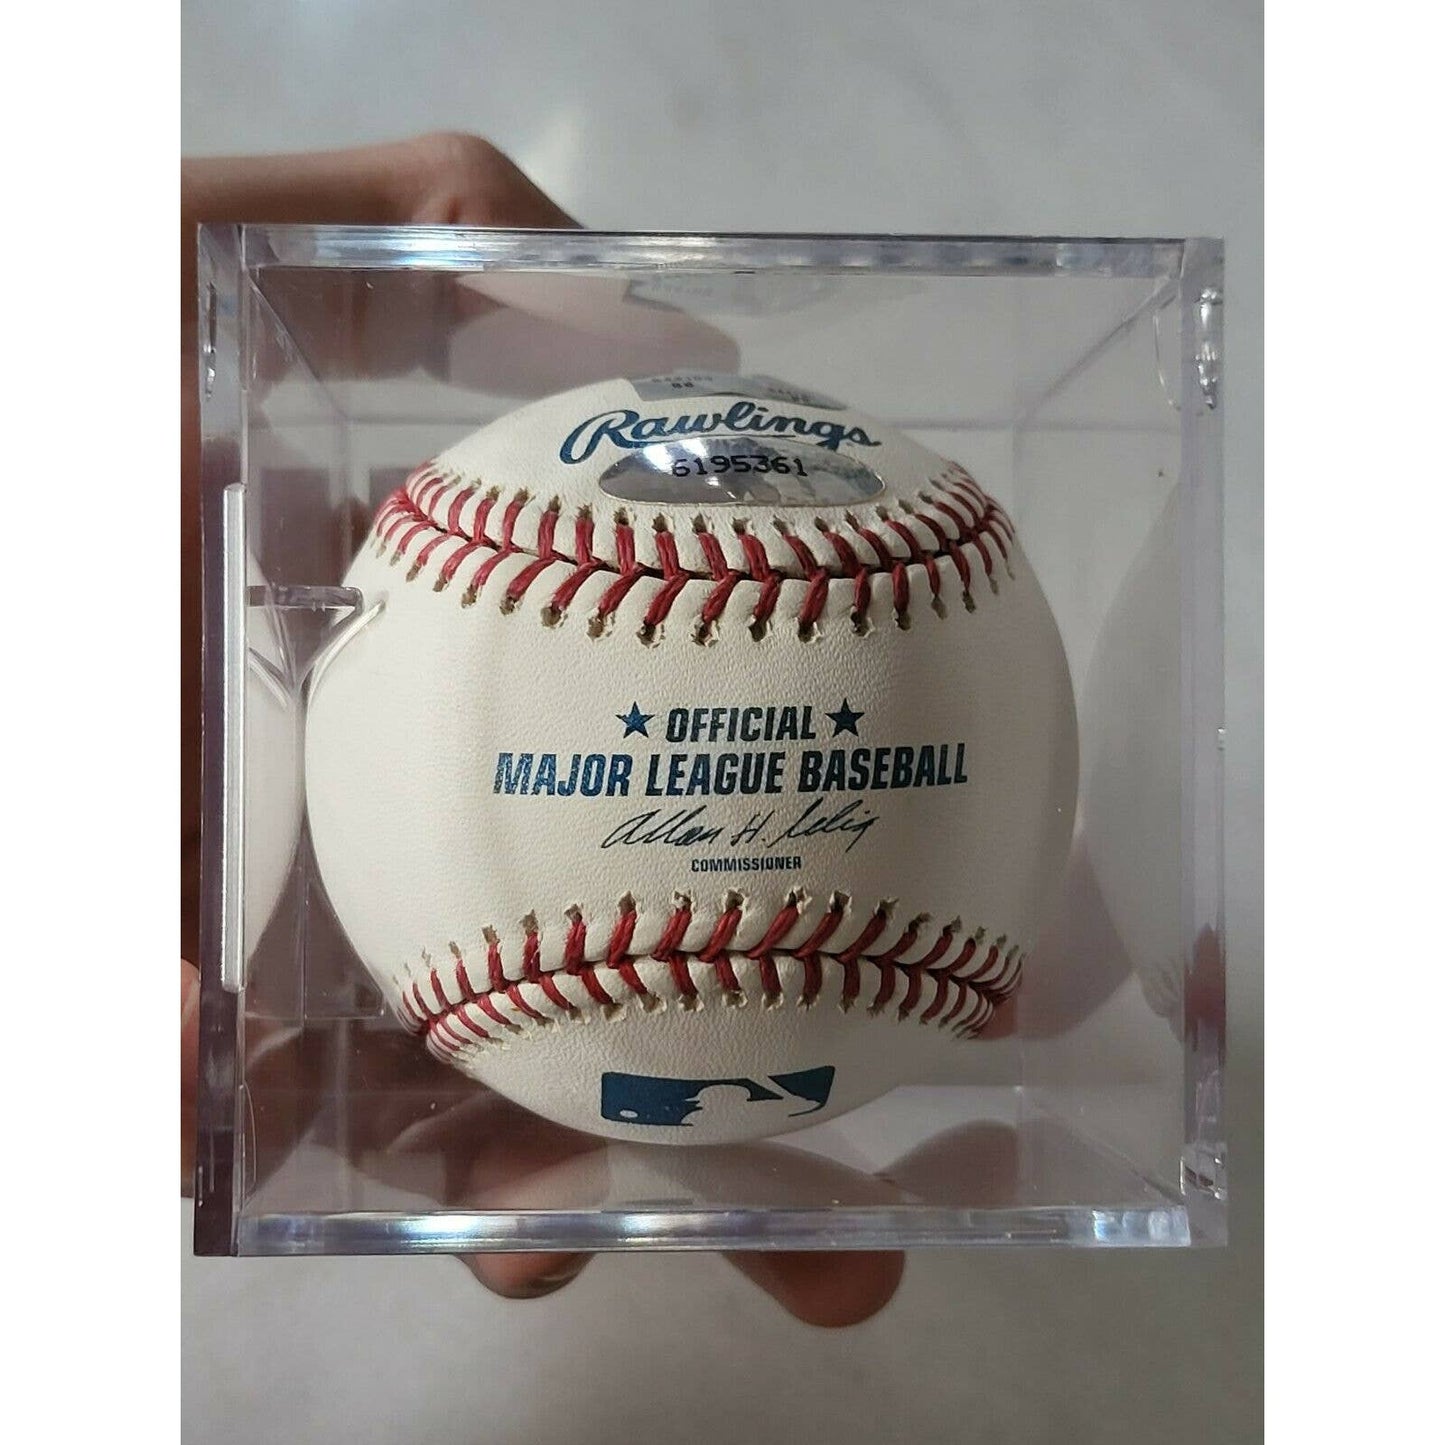 Stan Bahnsen Autographed/Signed Baseball TRISTAR 68 AL ROY - TreasuresEvolved